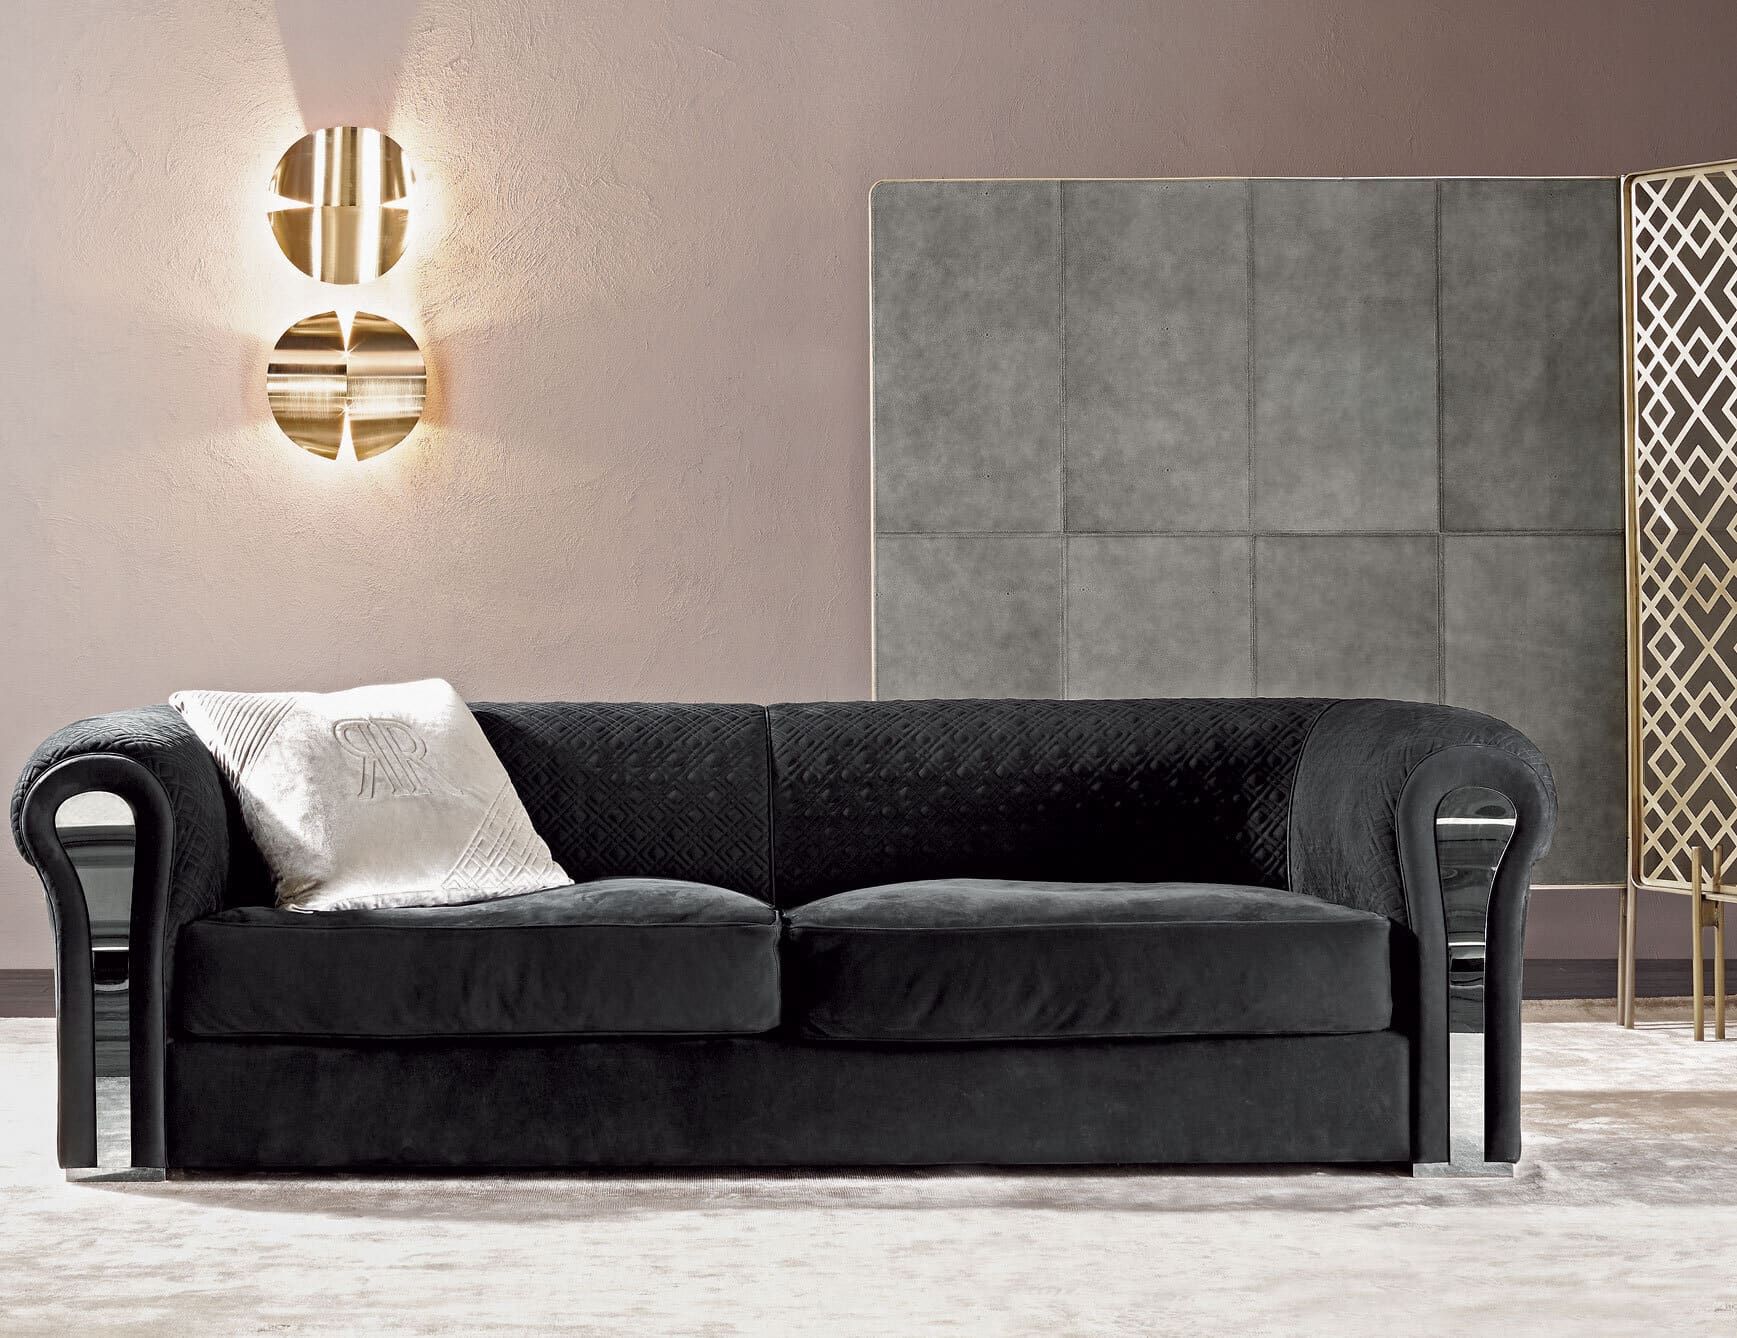 Amnesia modern luxury sofa chair with black leather